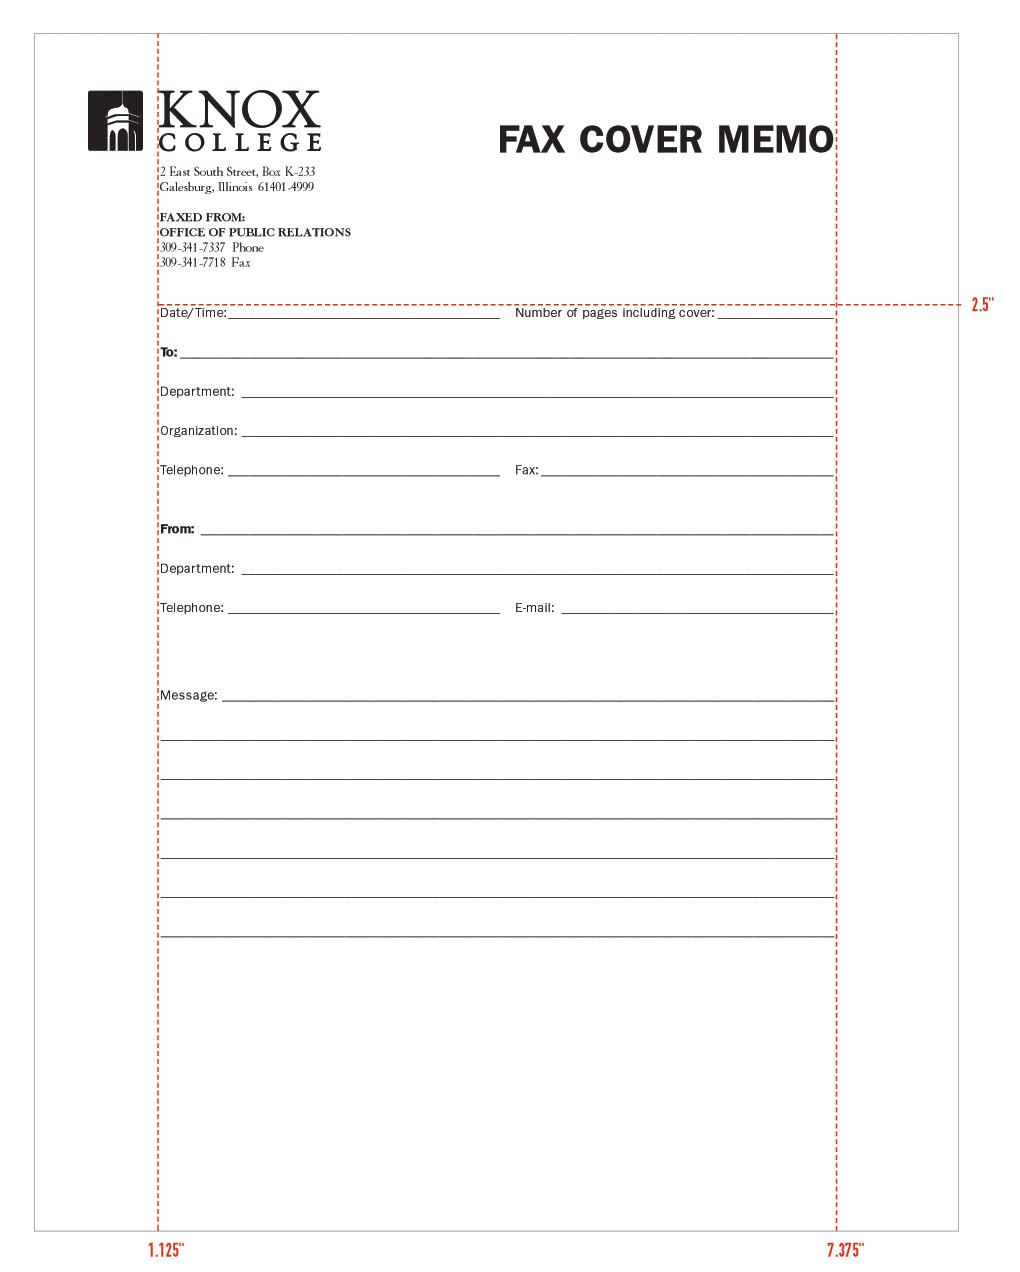 Knox Fax Cover memo